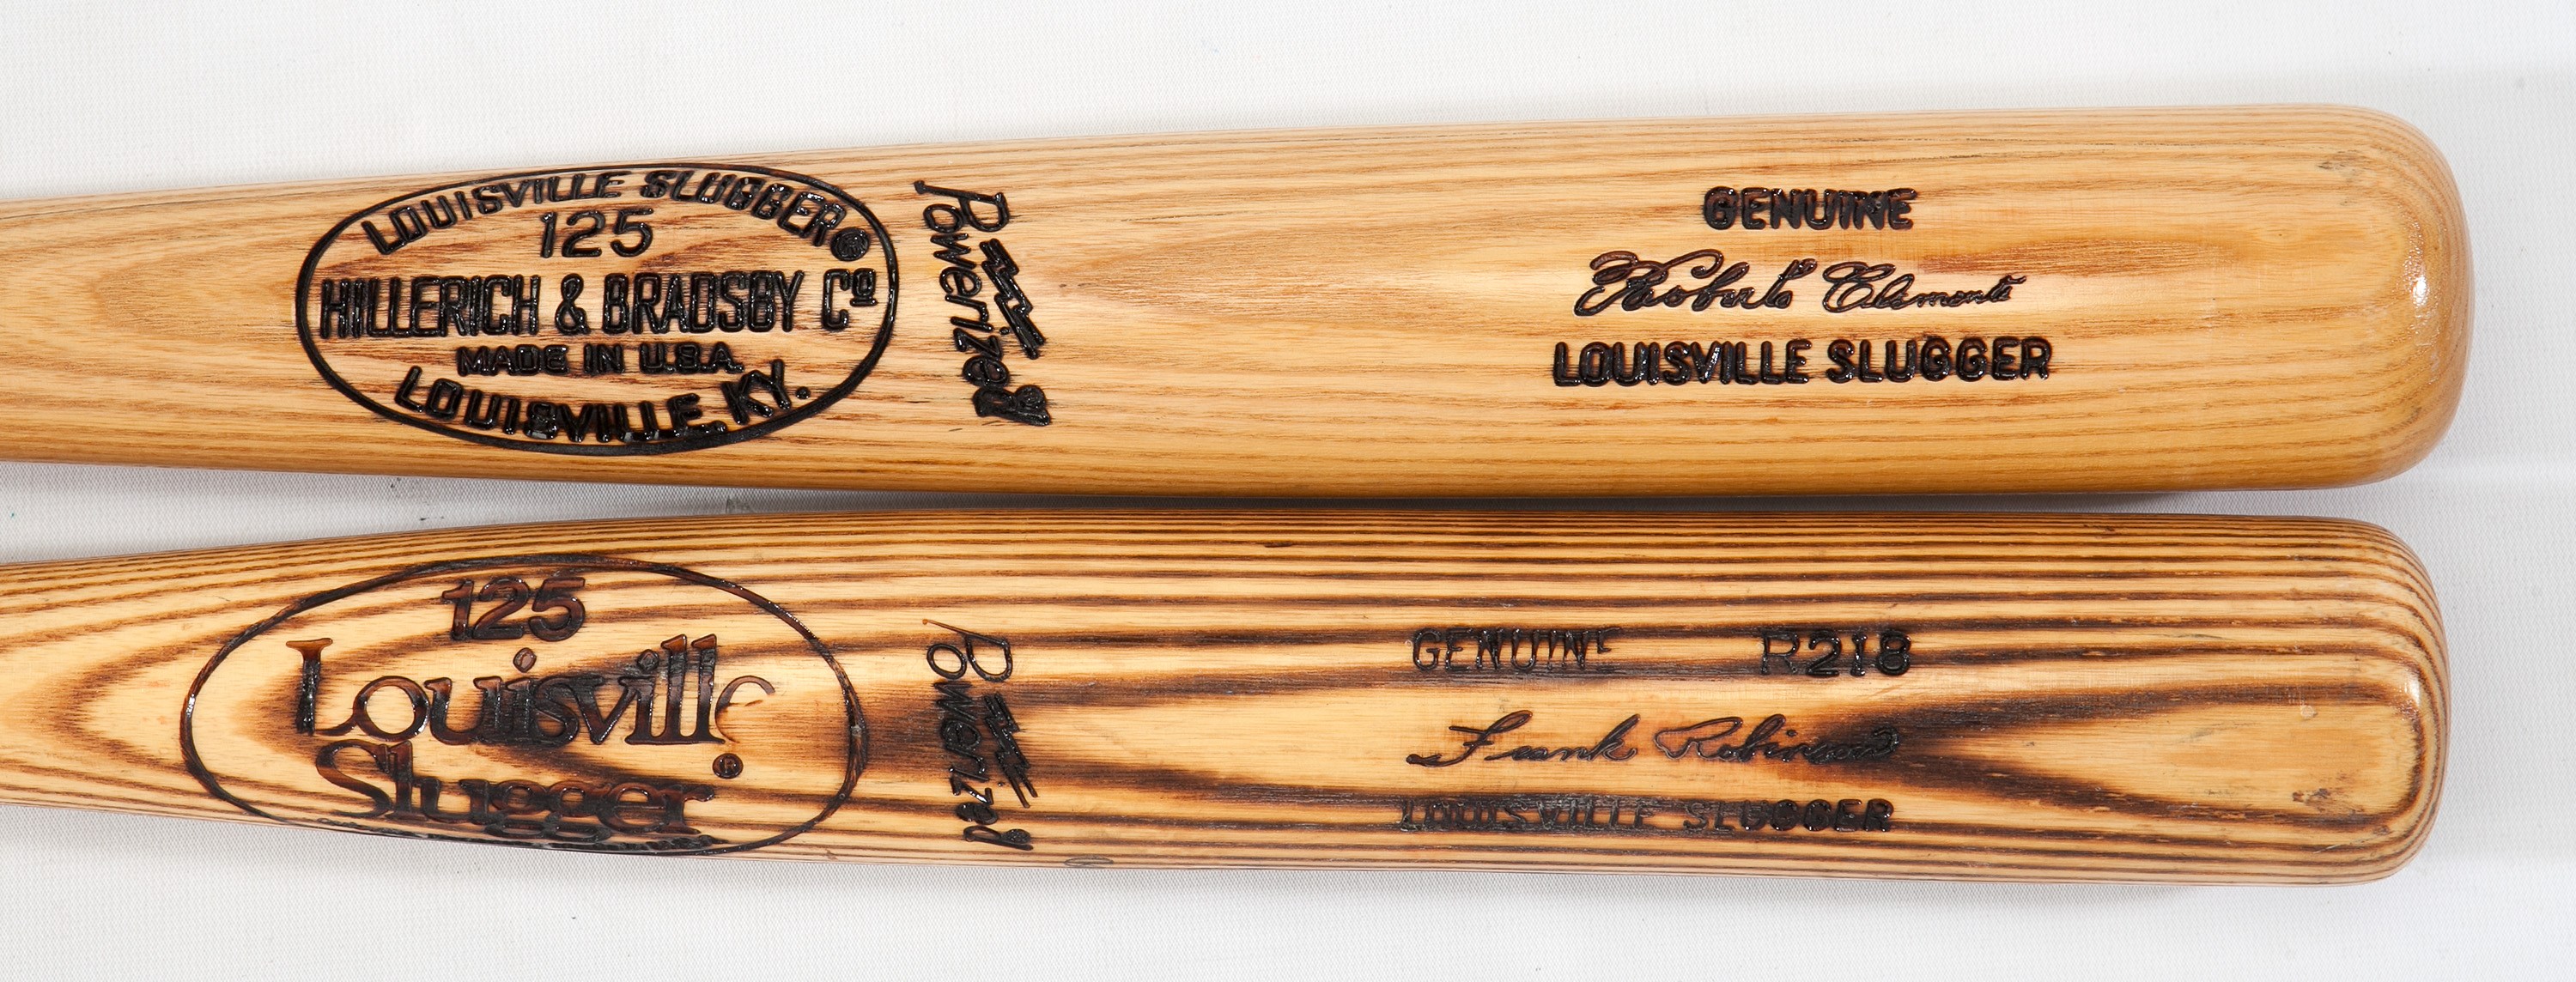 Frank Robinson Signed Louisville Slugger Mini Baseball Bat (PSA